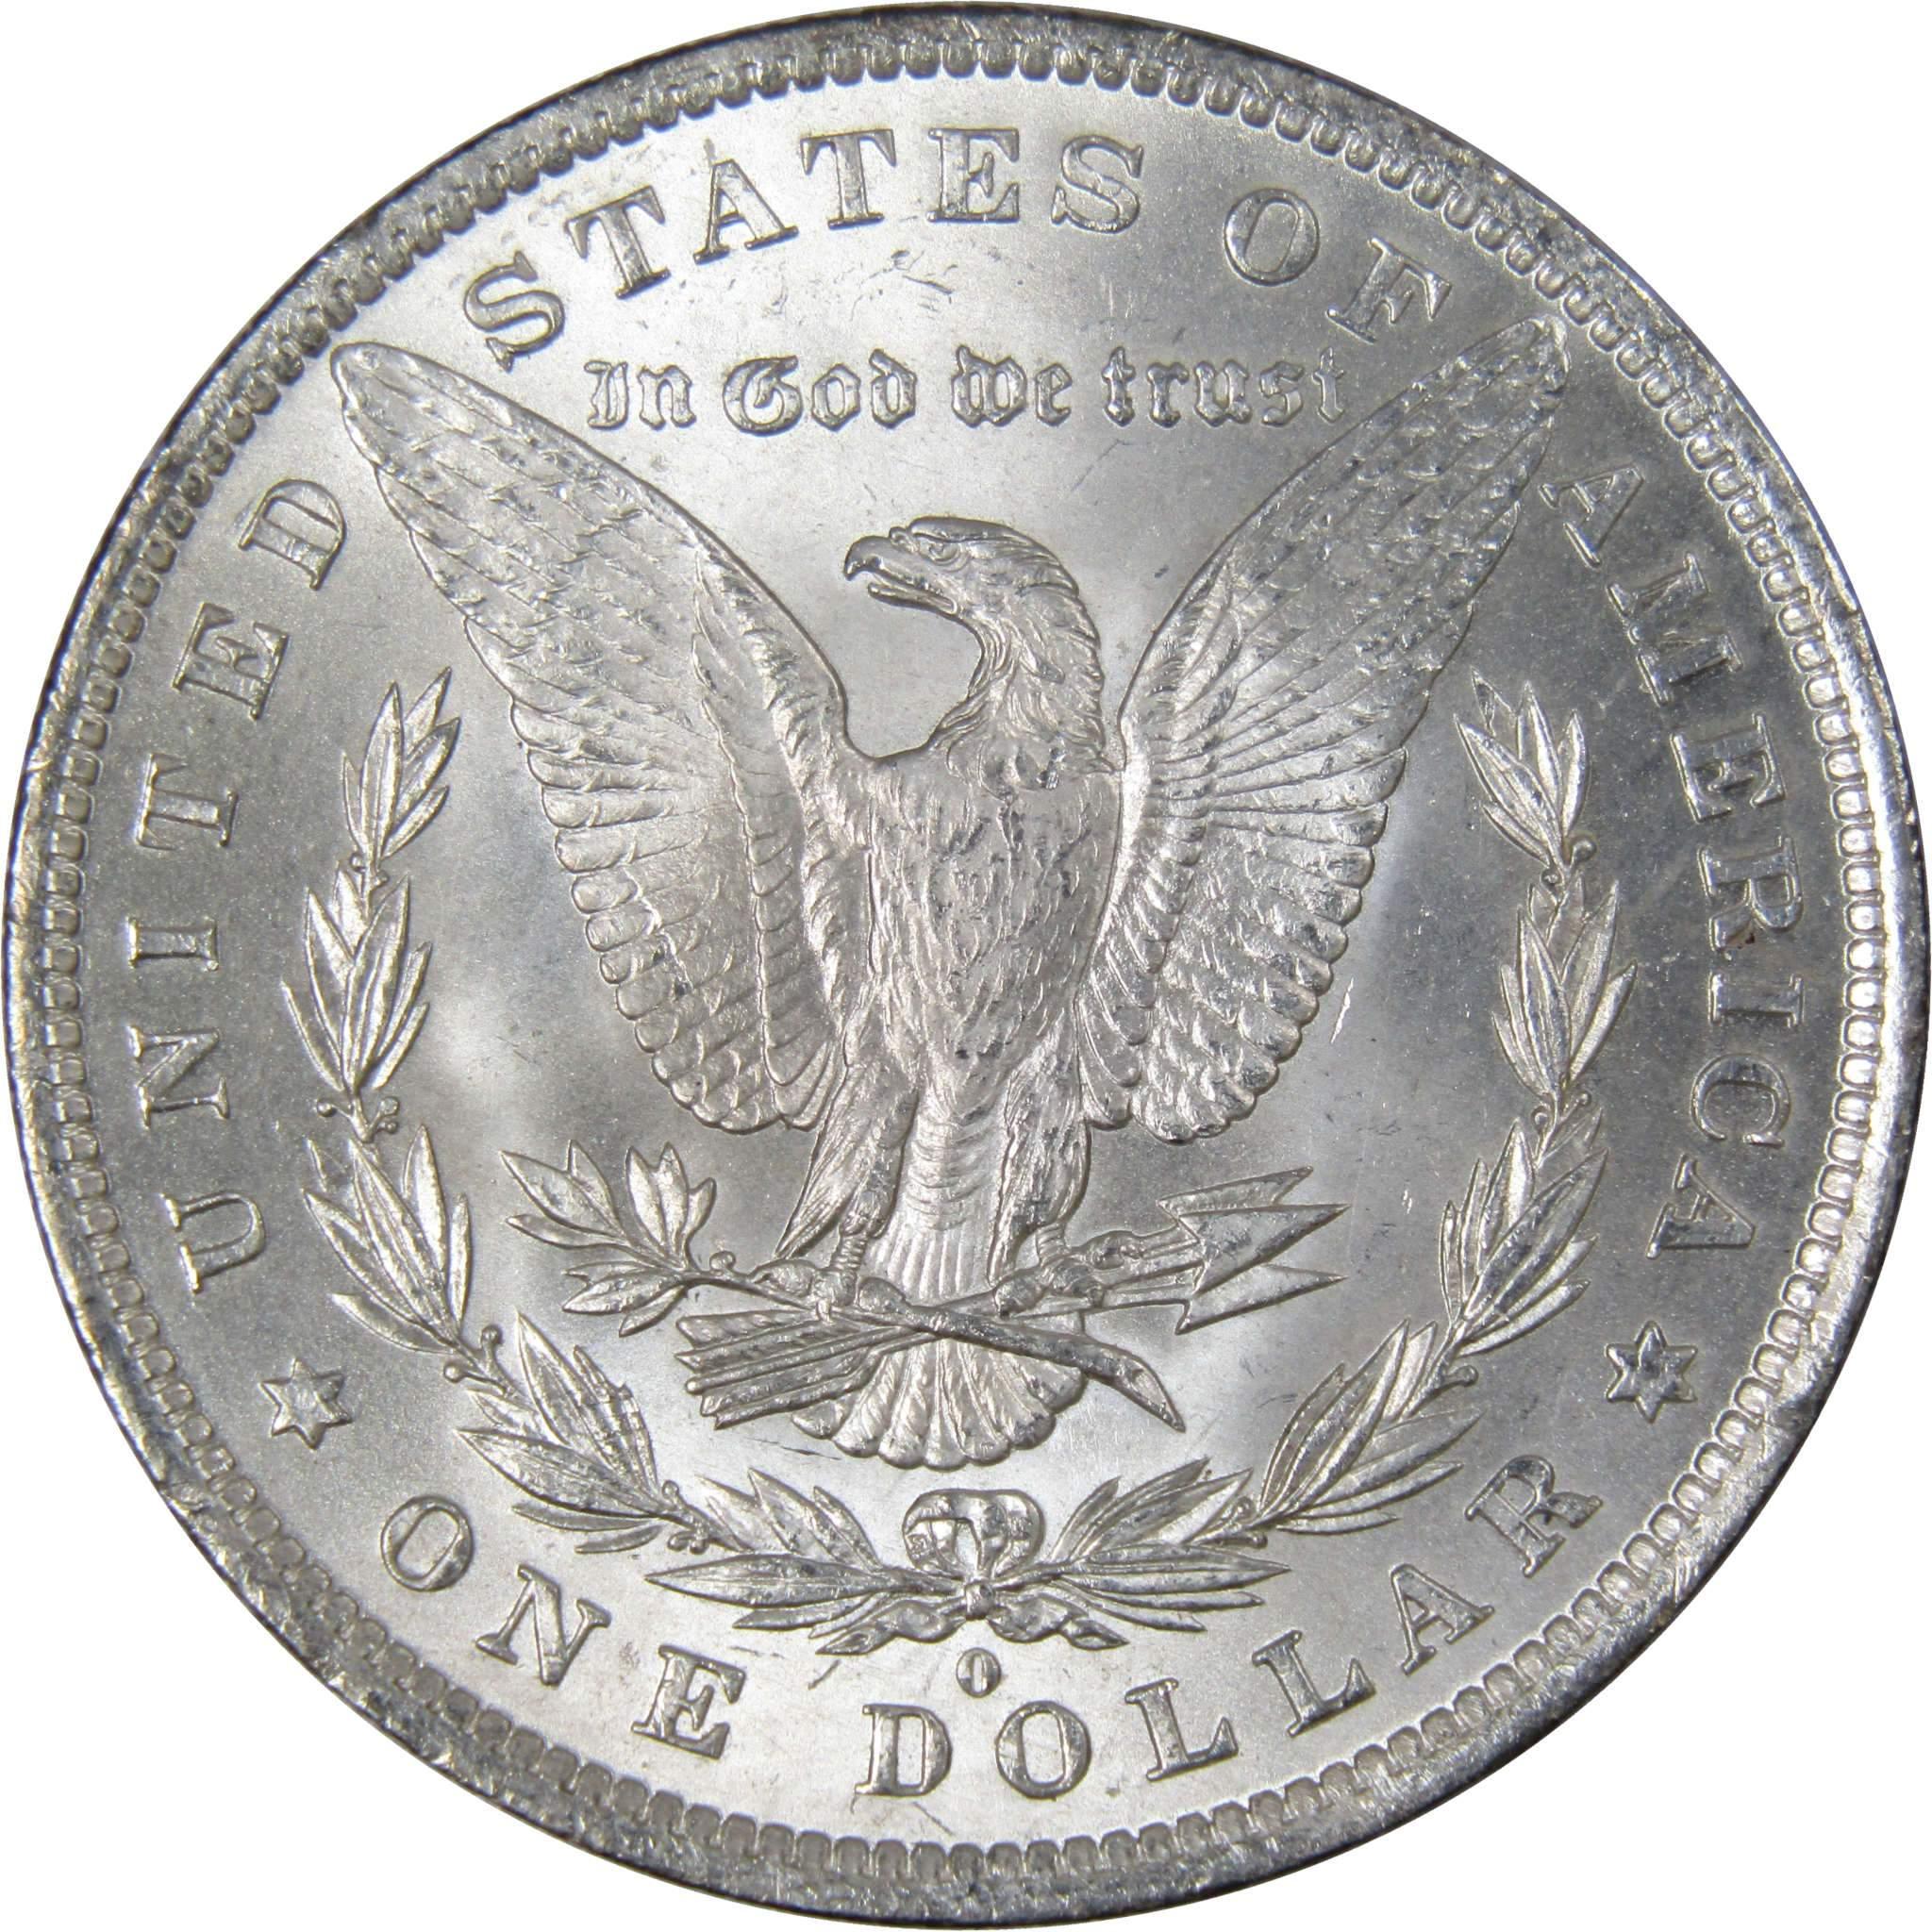 1884 O Morgan Dollar BU Very Choice Uncirculated Mint State 90% Silver $1 Coin - Morgan coin - Morgan silver dollar - Morgan silver dollar for sale - Profile Coins &amp; Collectibles